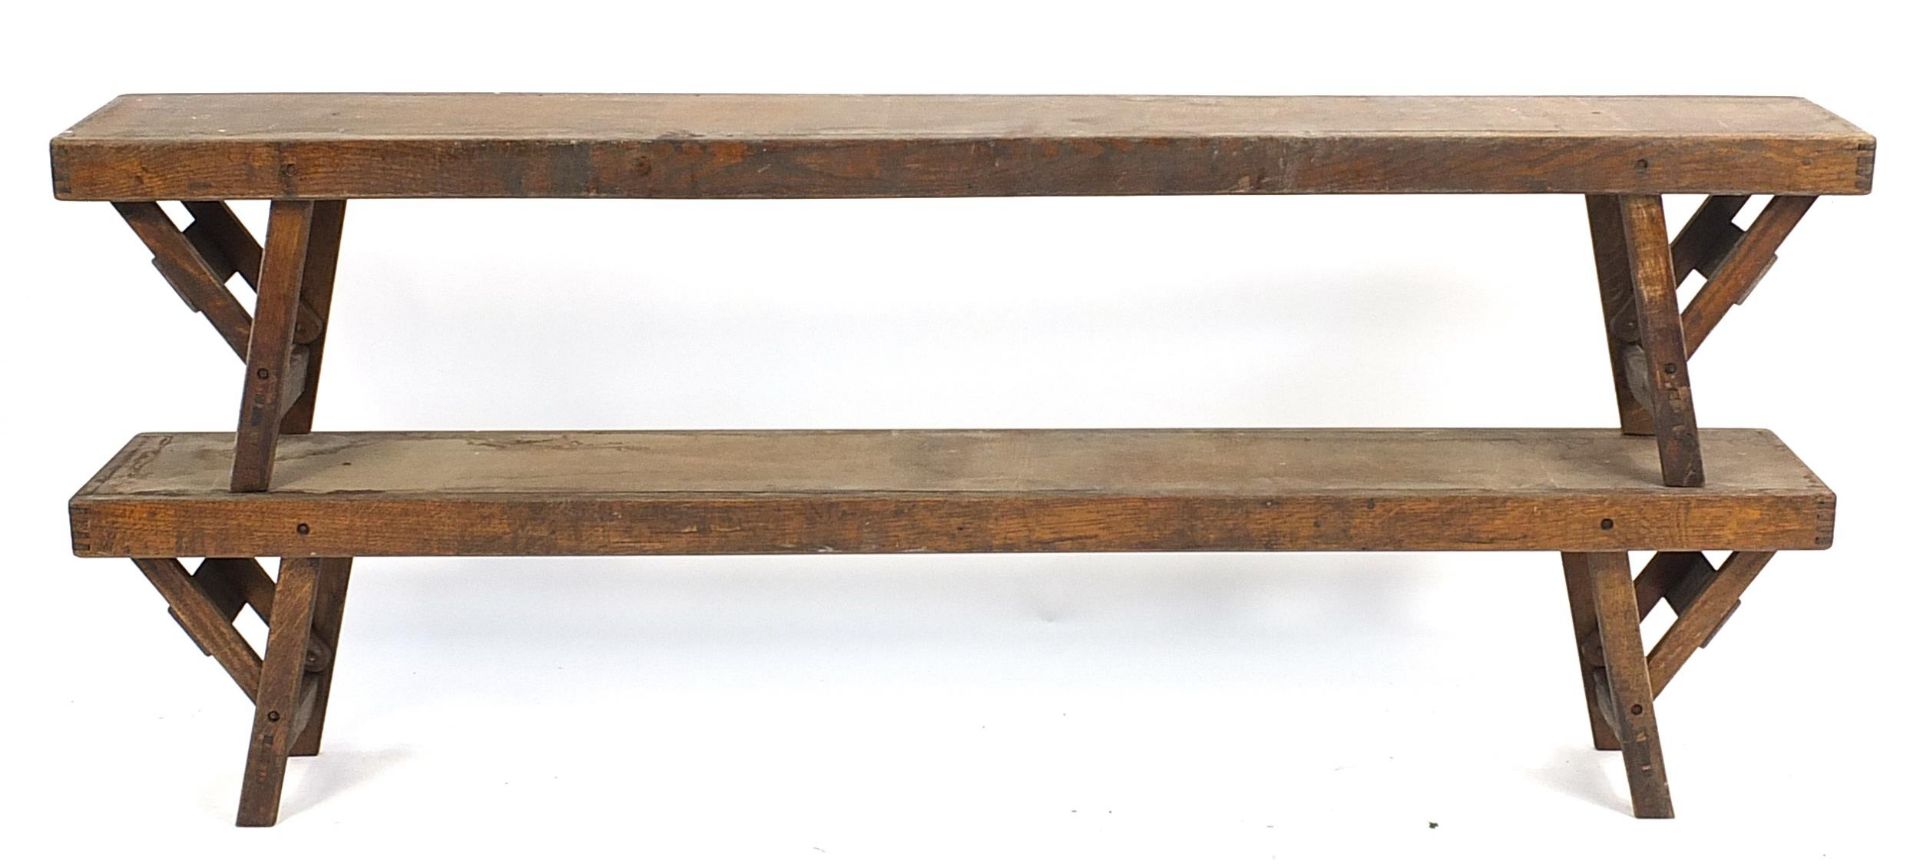 Pair of vintage folding gymnasium benches, 38cm H x 183cm W x 25cm D - Image 2 of 4